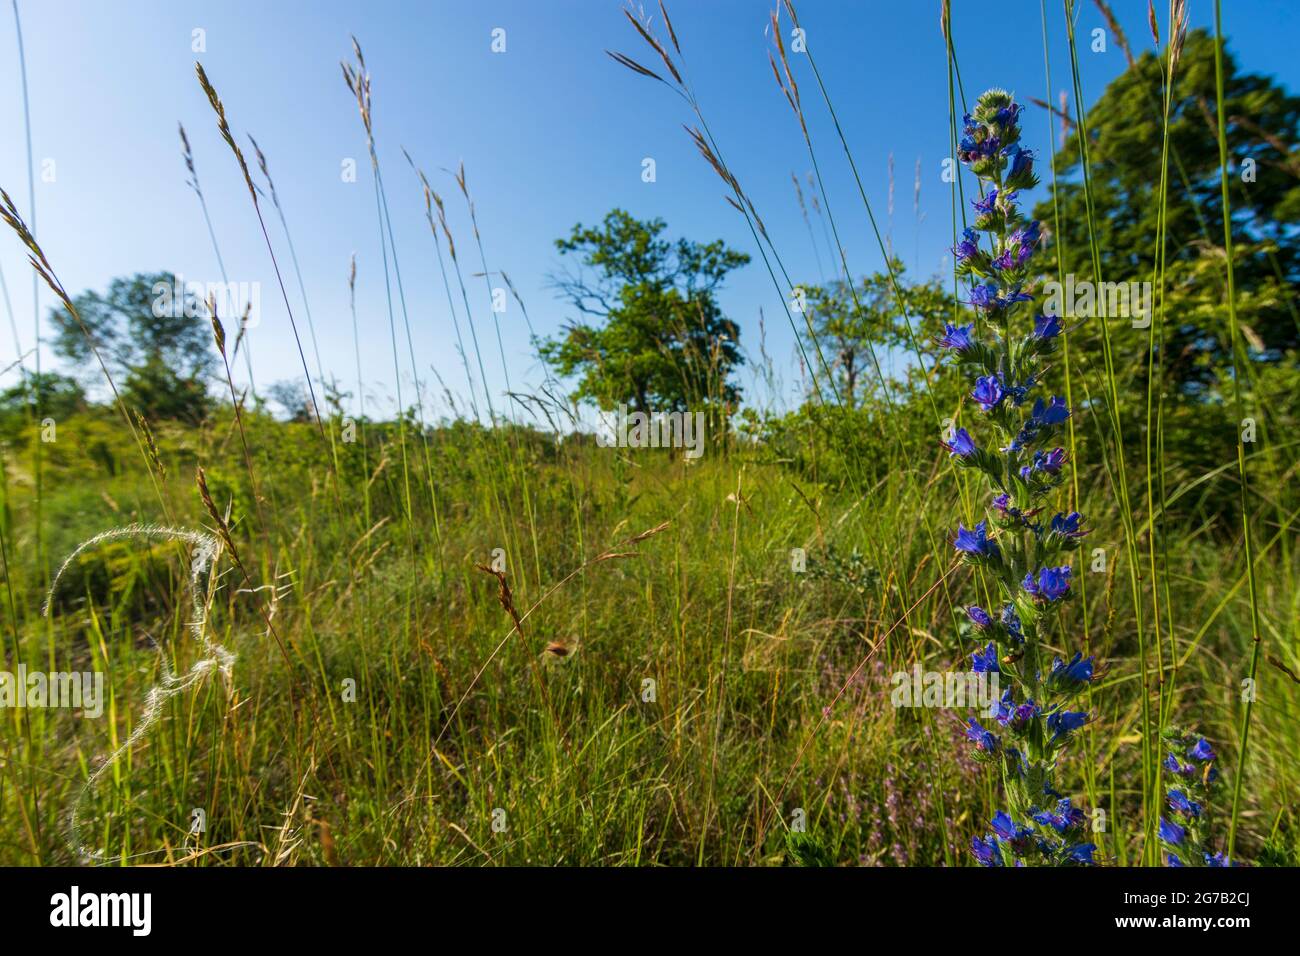 Vienna, viper's bugloss (blueweed, Echium vulgare), in Lobau, part of Nationalpark Donau-Auen (Danube-Auen National Park) in 22. Donaustadt, Wien, Austria Stock Photo